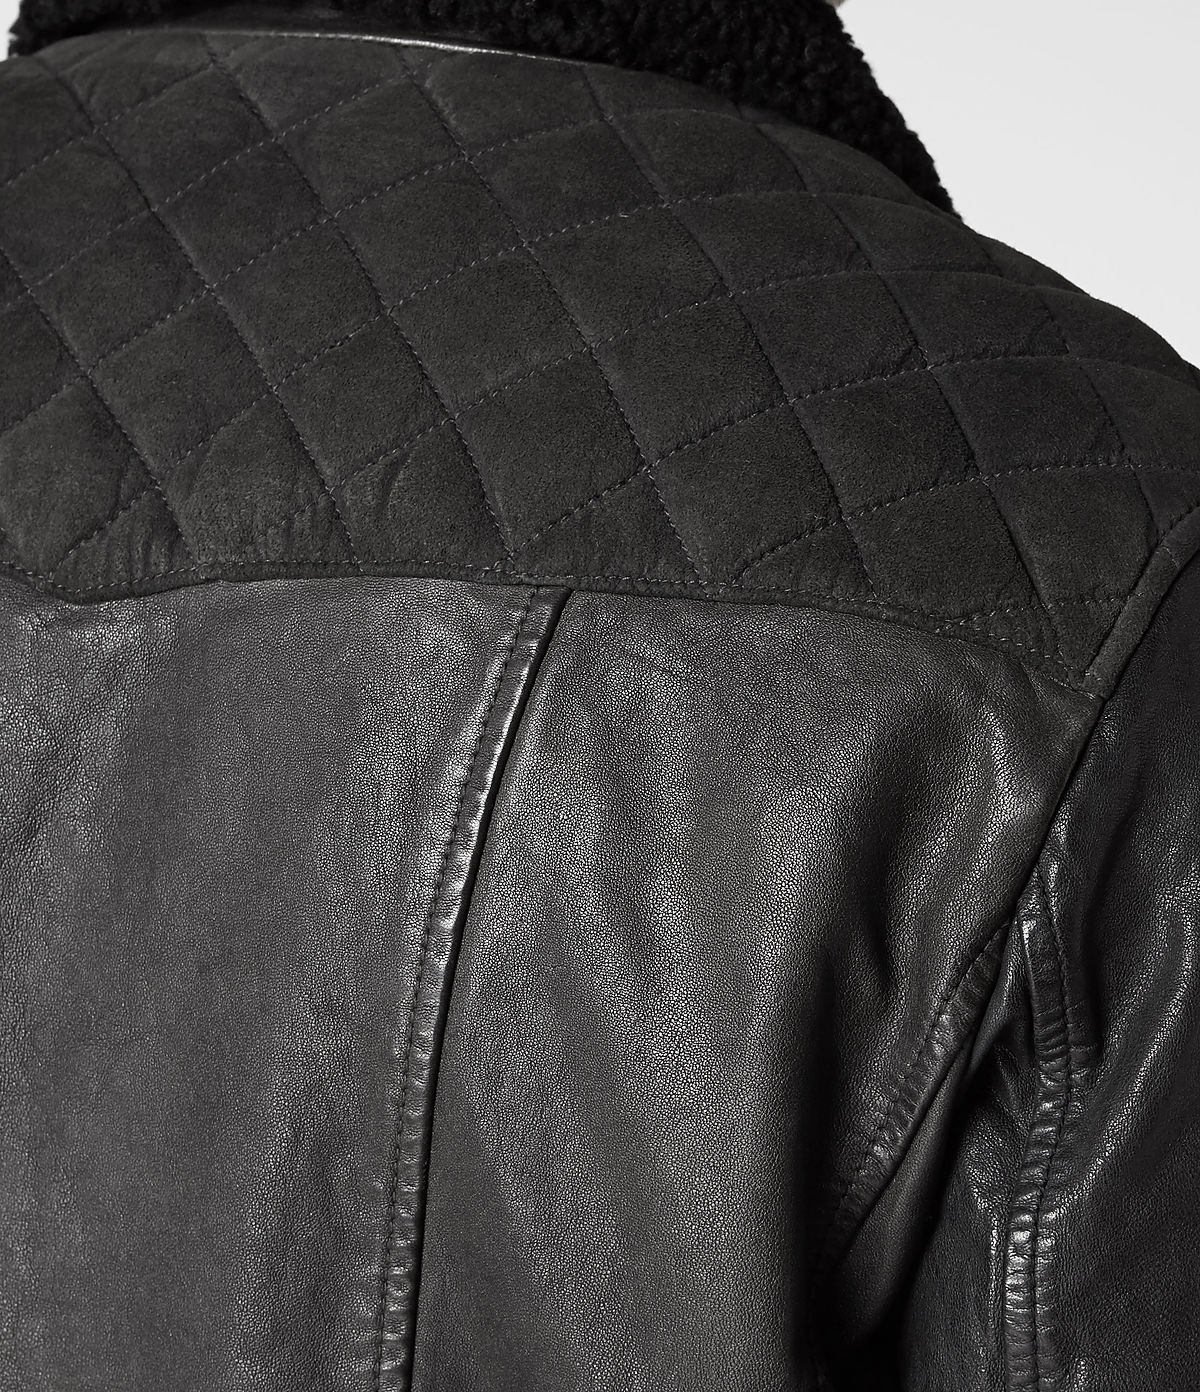 AllSaints Raven Leather Biker Jacket in Gray for Men - Lyst